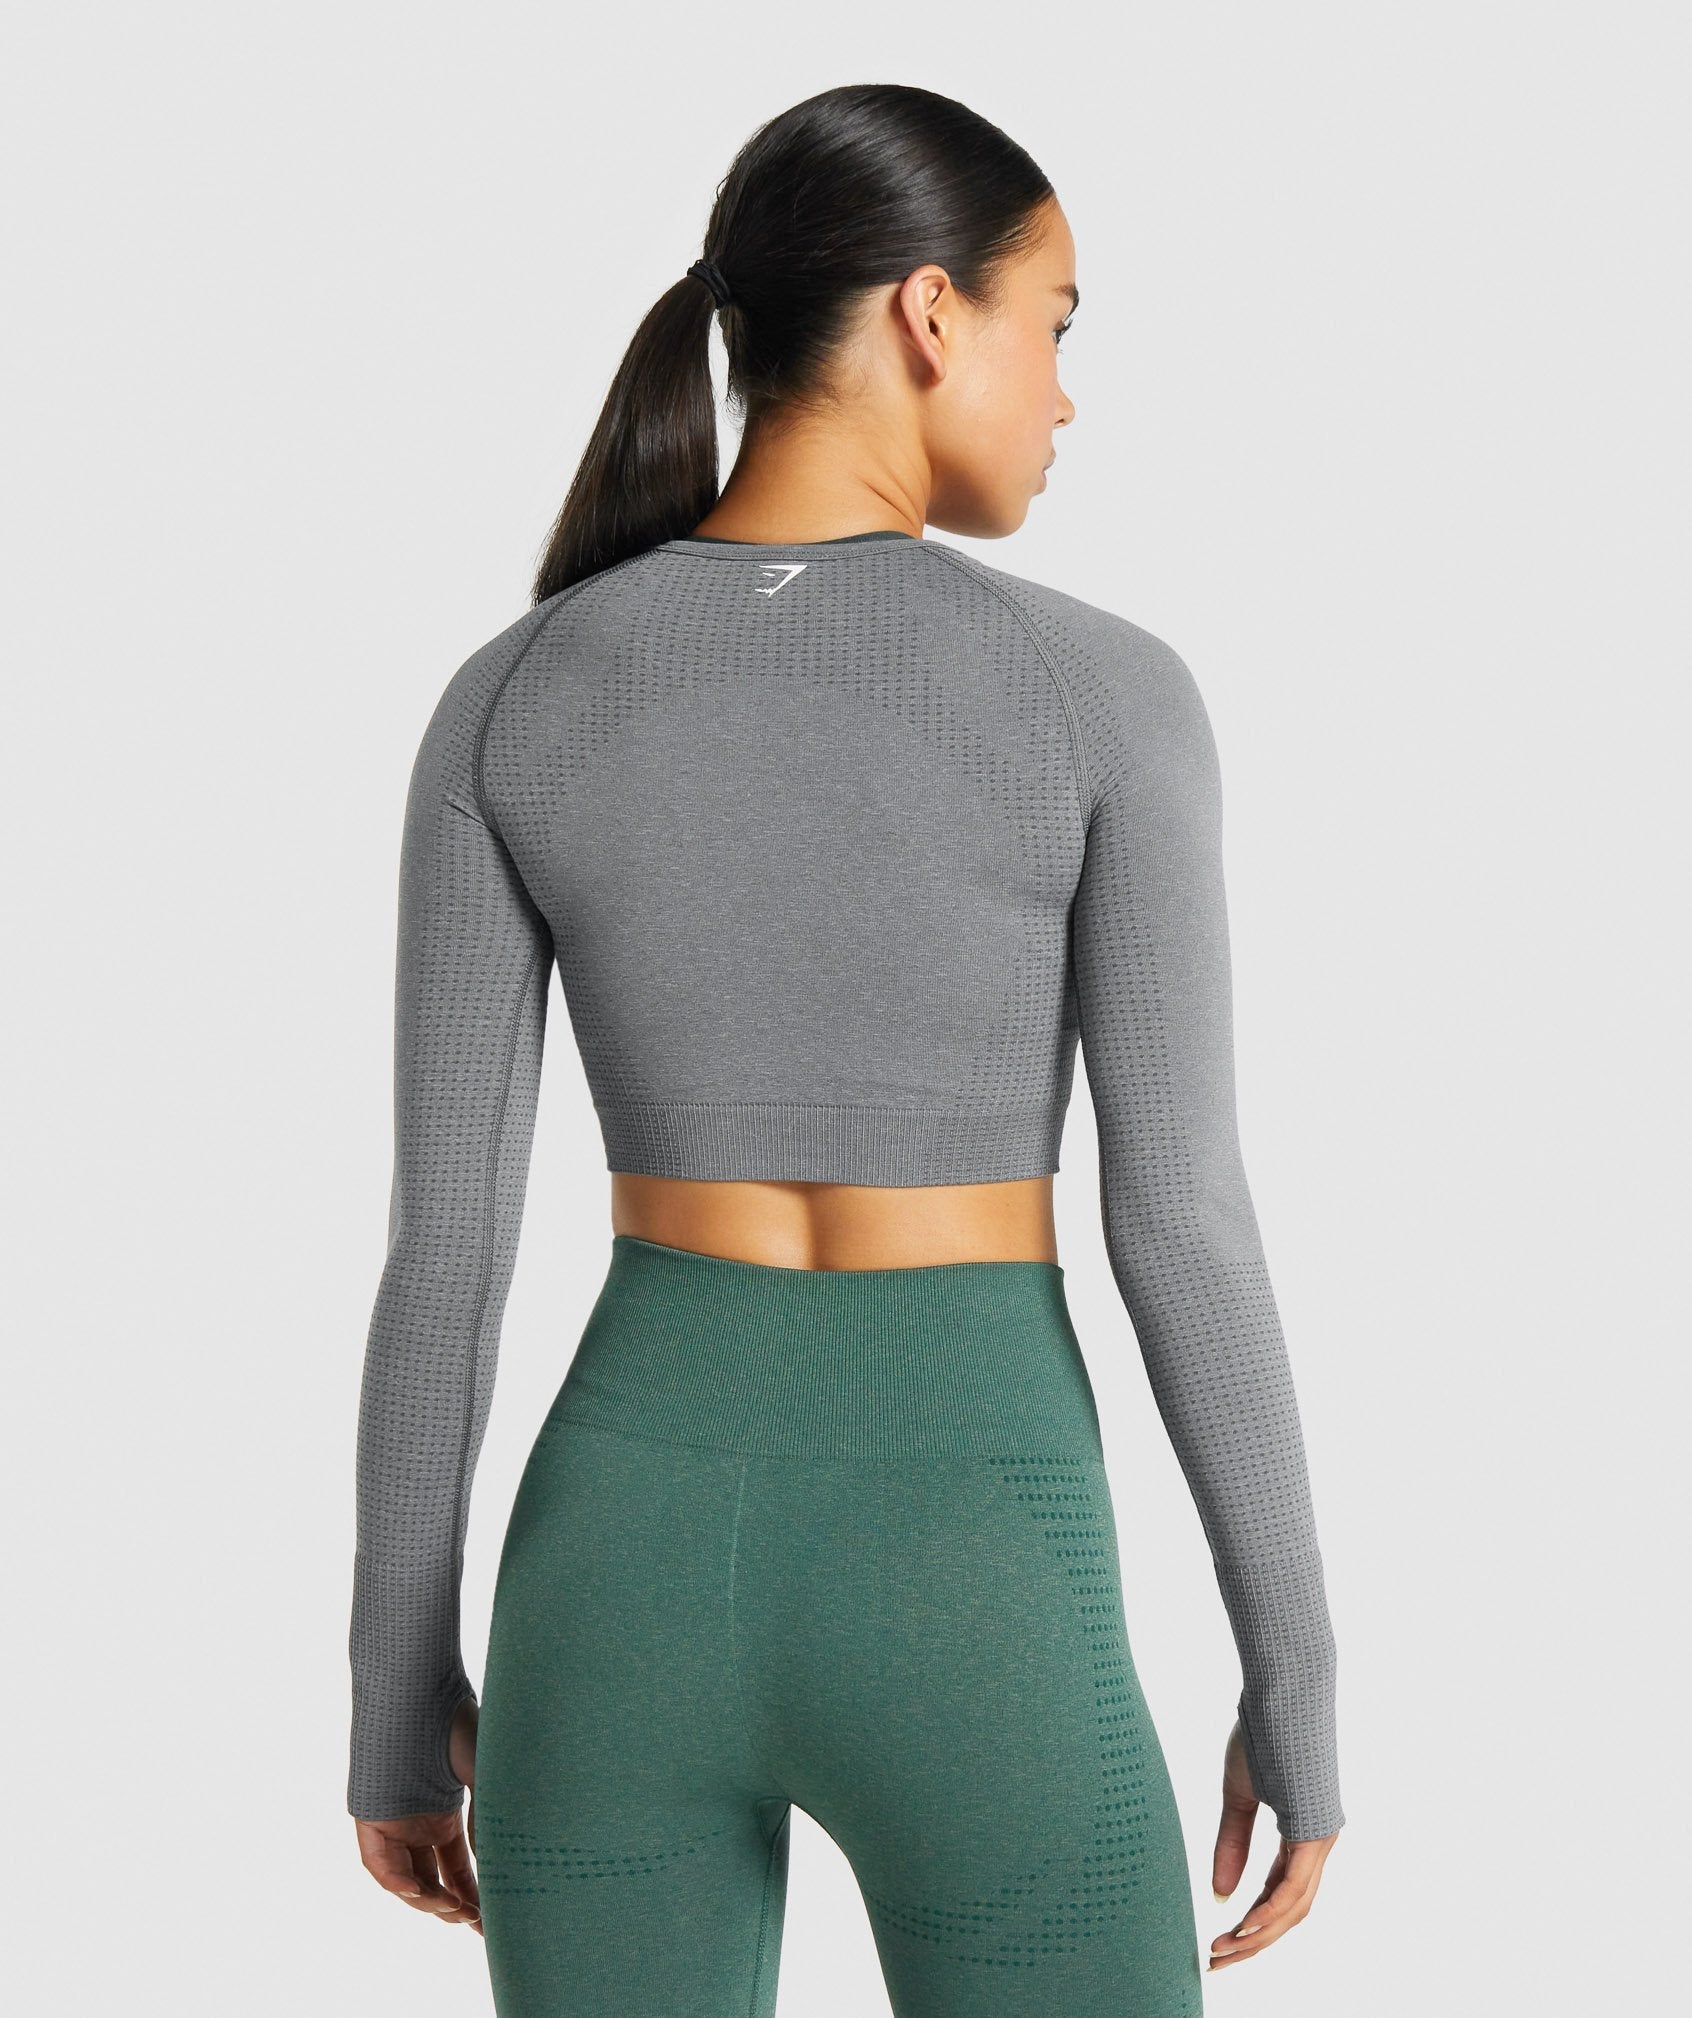 Gymshark Women's Vital Seamless 2.0 Long Sleeve Crop Top SMALL DARK GREEN  NEW